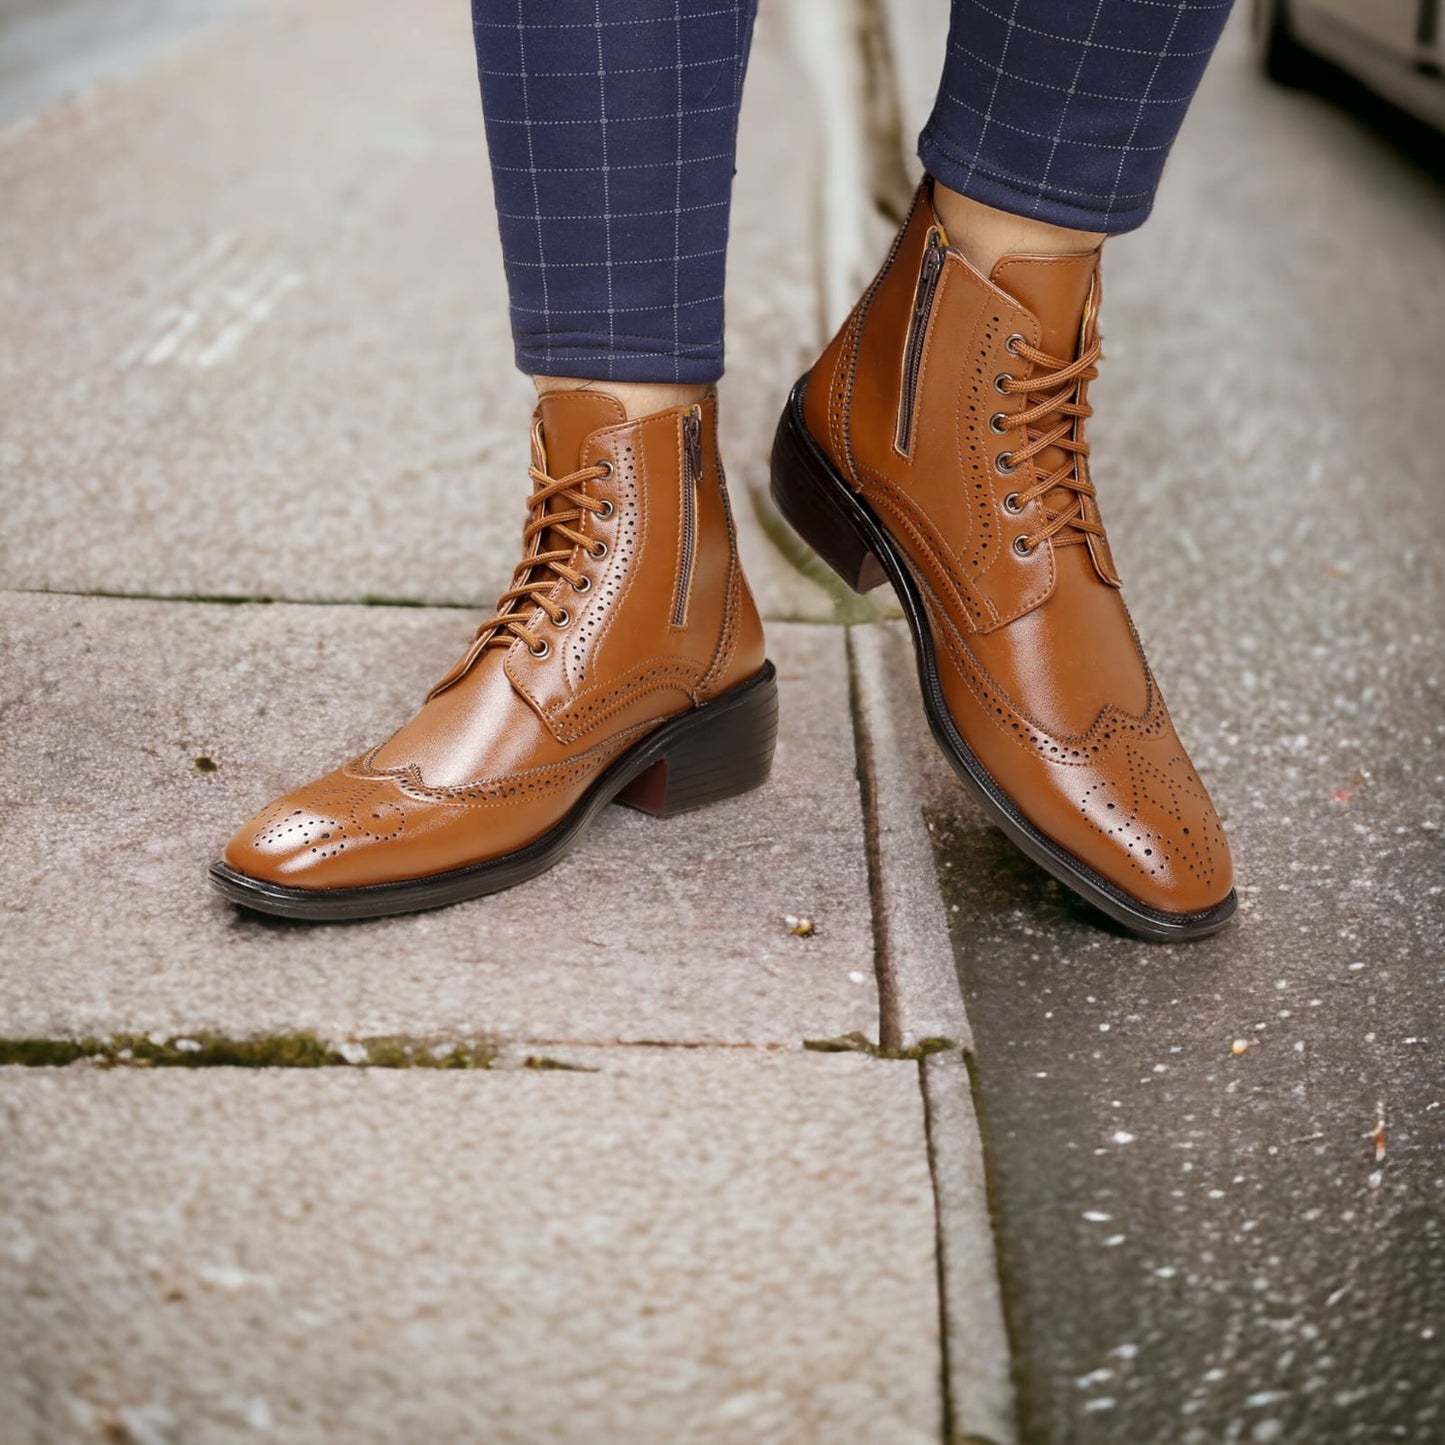 Jack Marc Brogue Tan Leather Height Increasing Boots Men - JACKMARC.COM